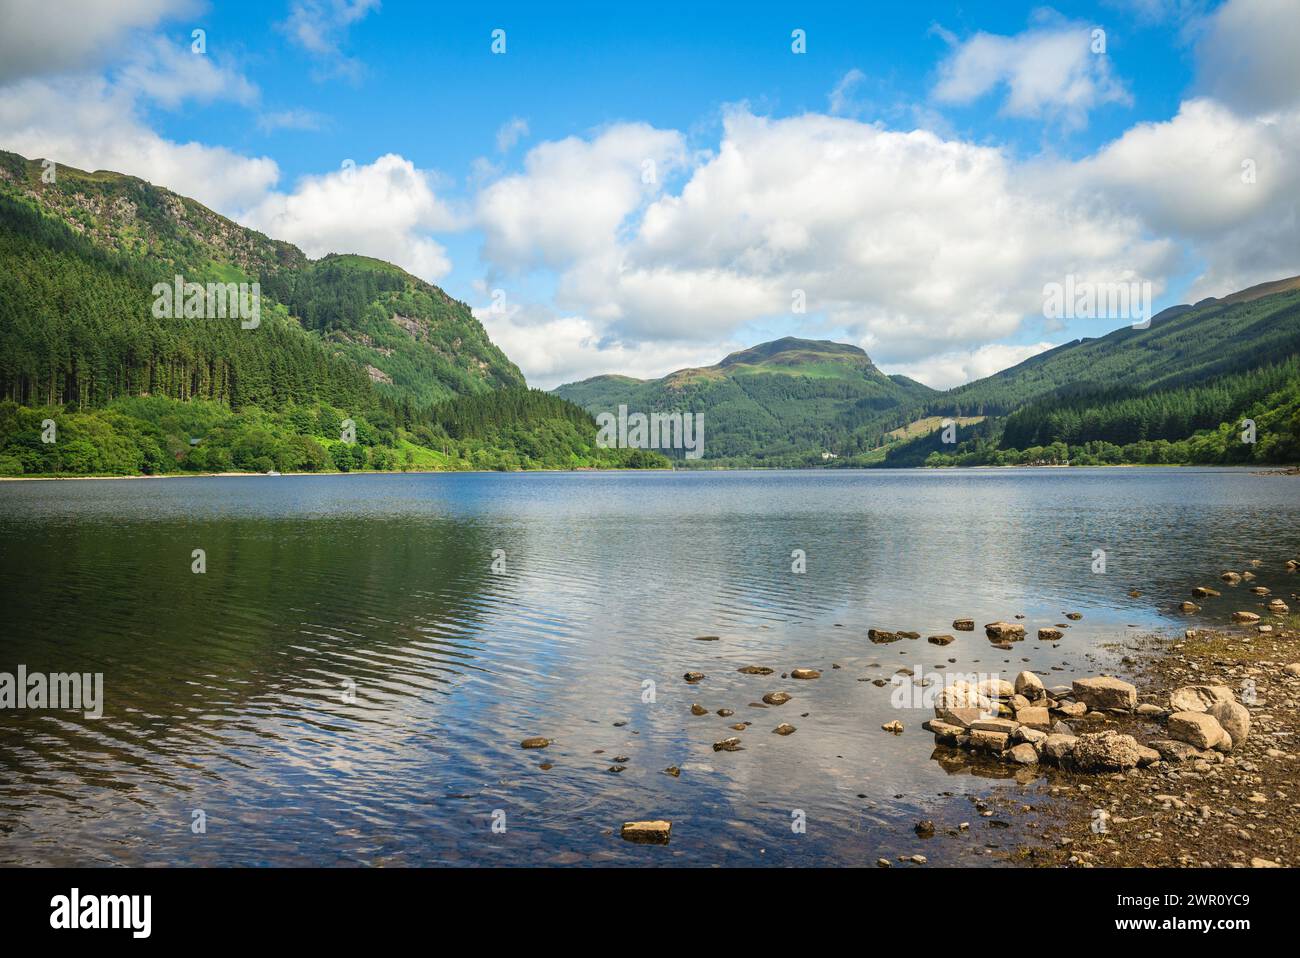 scenery of Loch Lomond at highlands in scotland, united kingdom Stock Photo